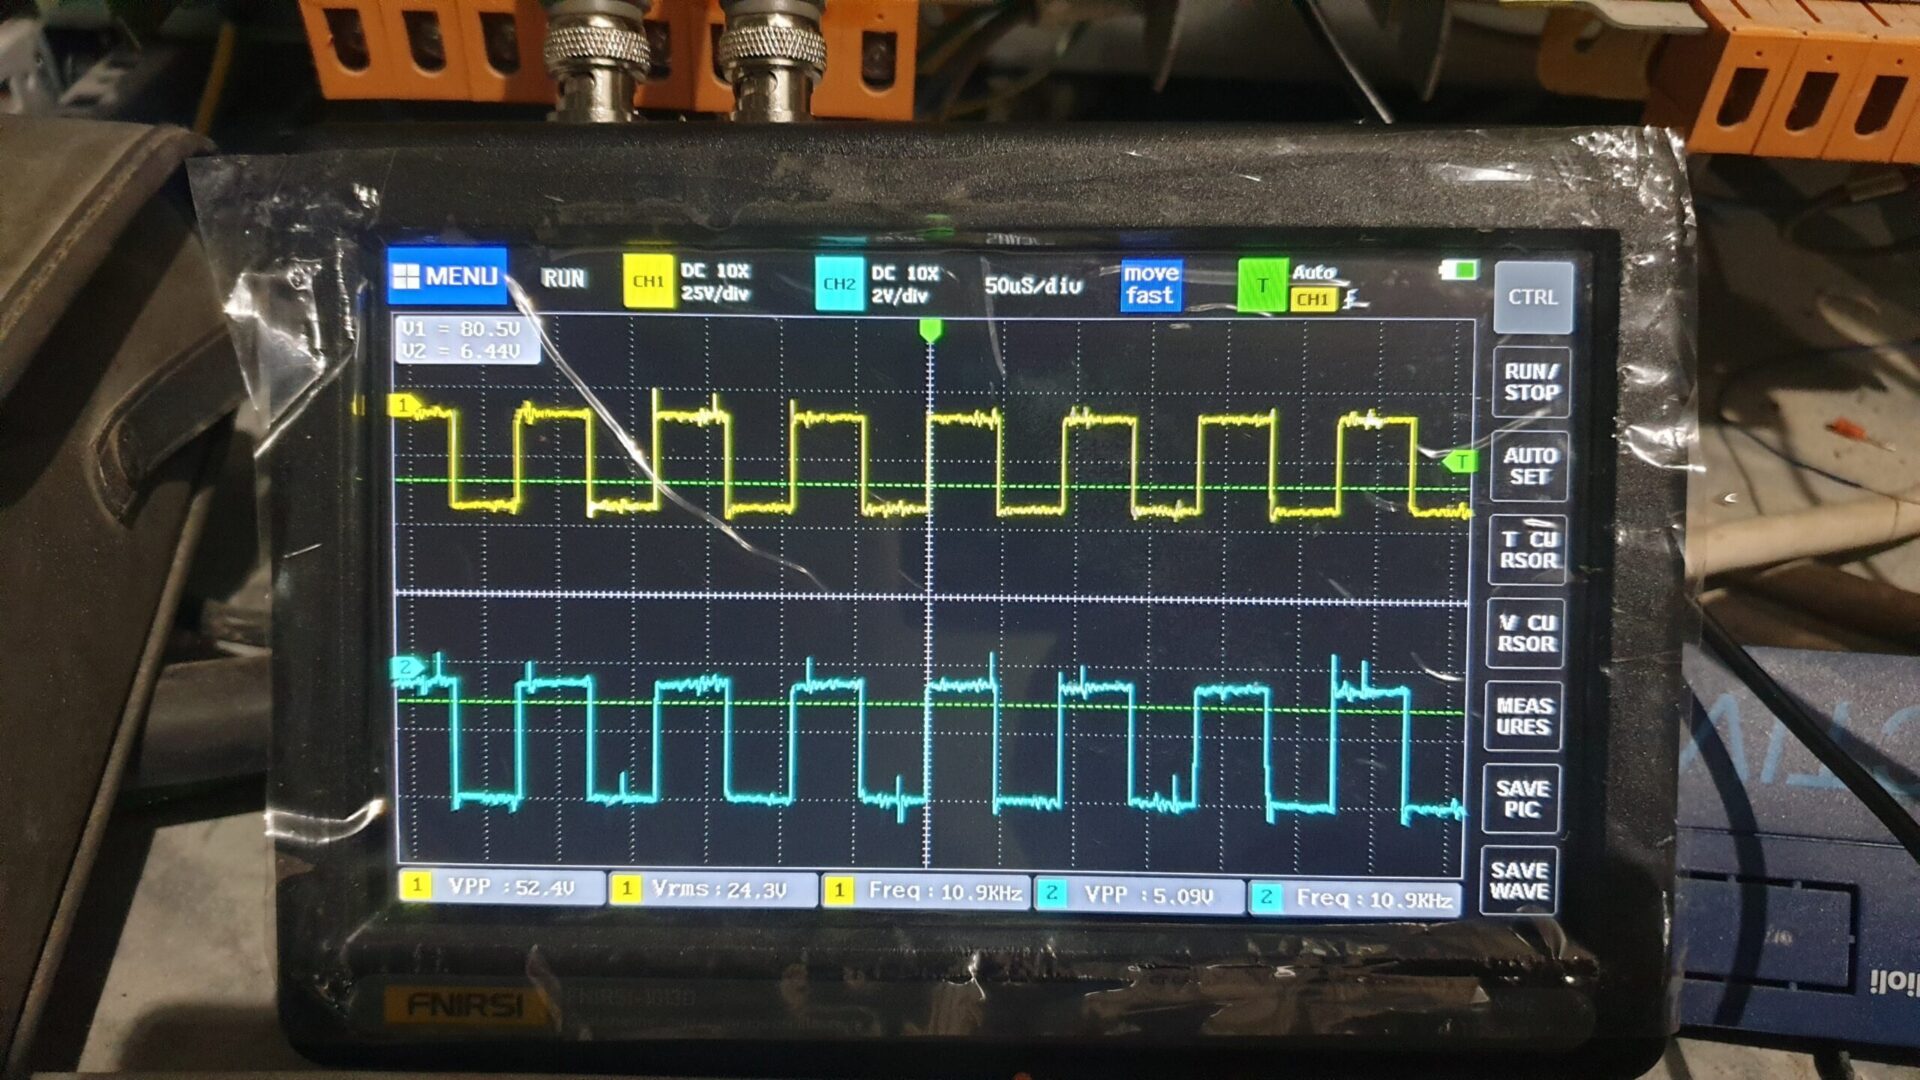 Oscilloscope in 1000 RPM shows 10.9 KHz